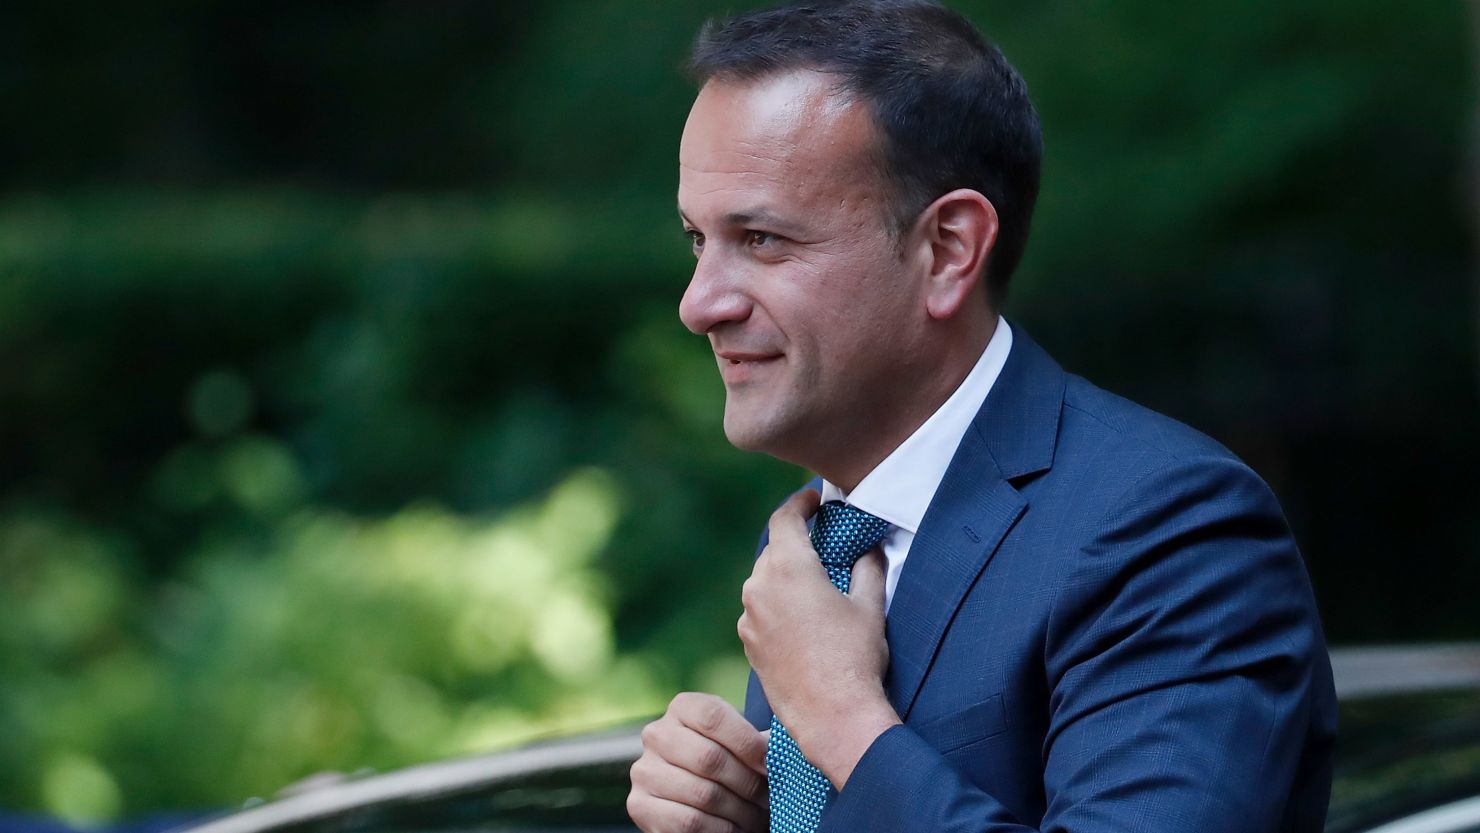 Leo Varadkar, 38, became Ireland's Taoiseach (Prime Minister) last June.